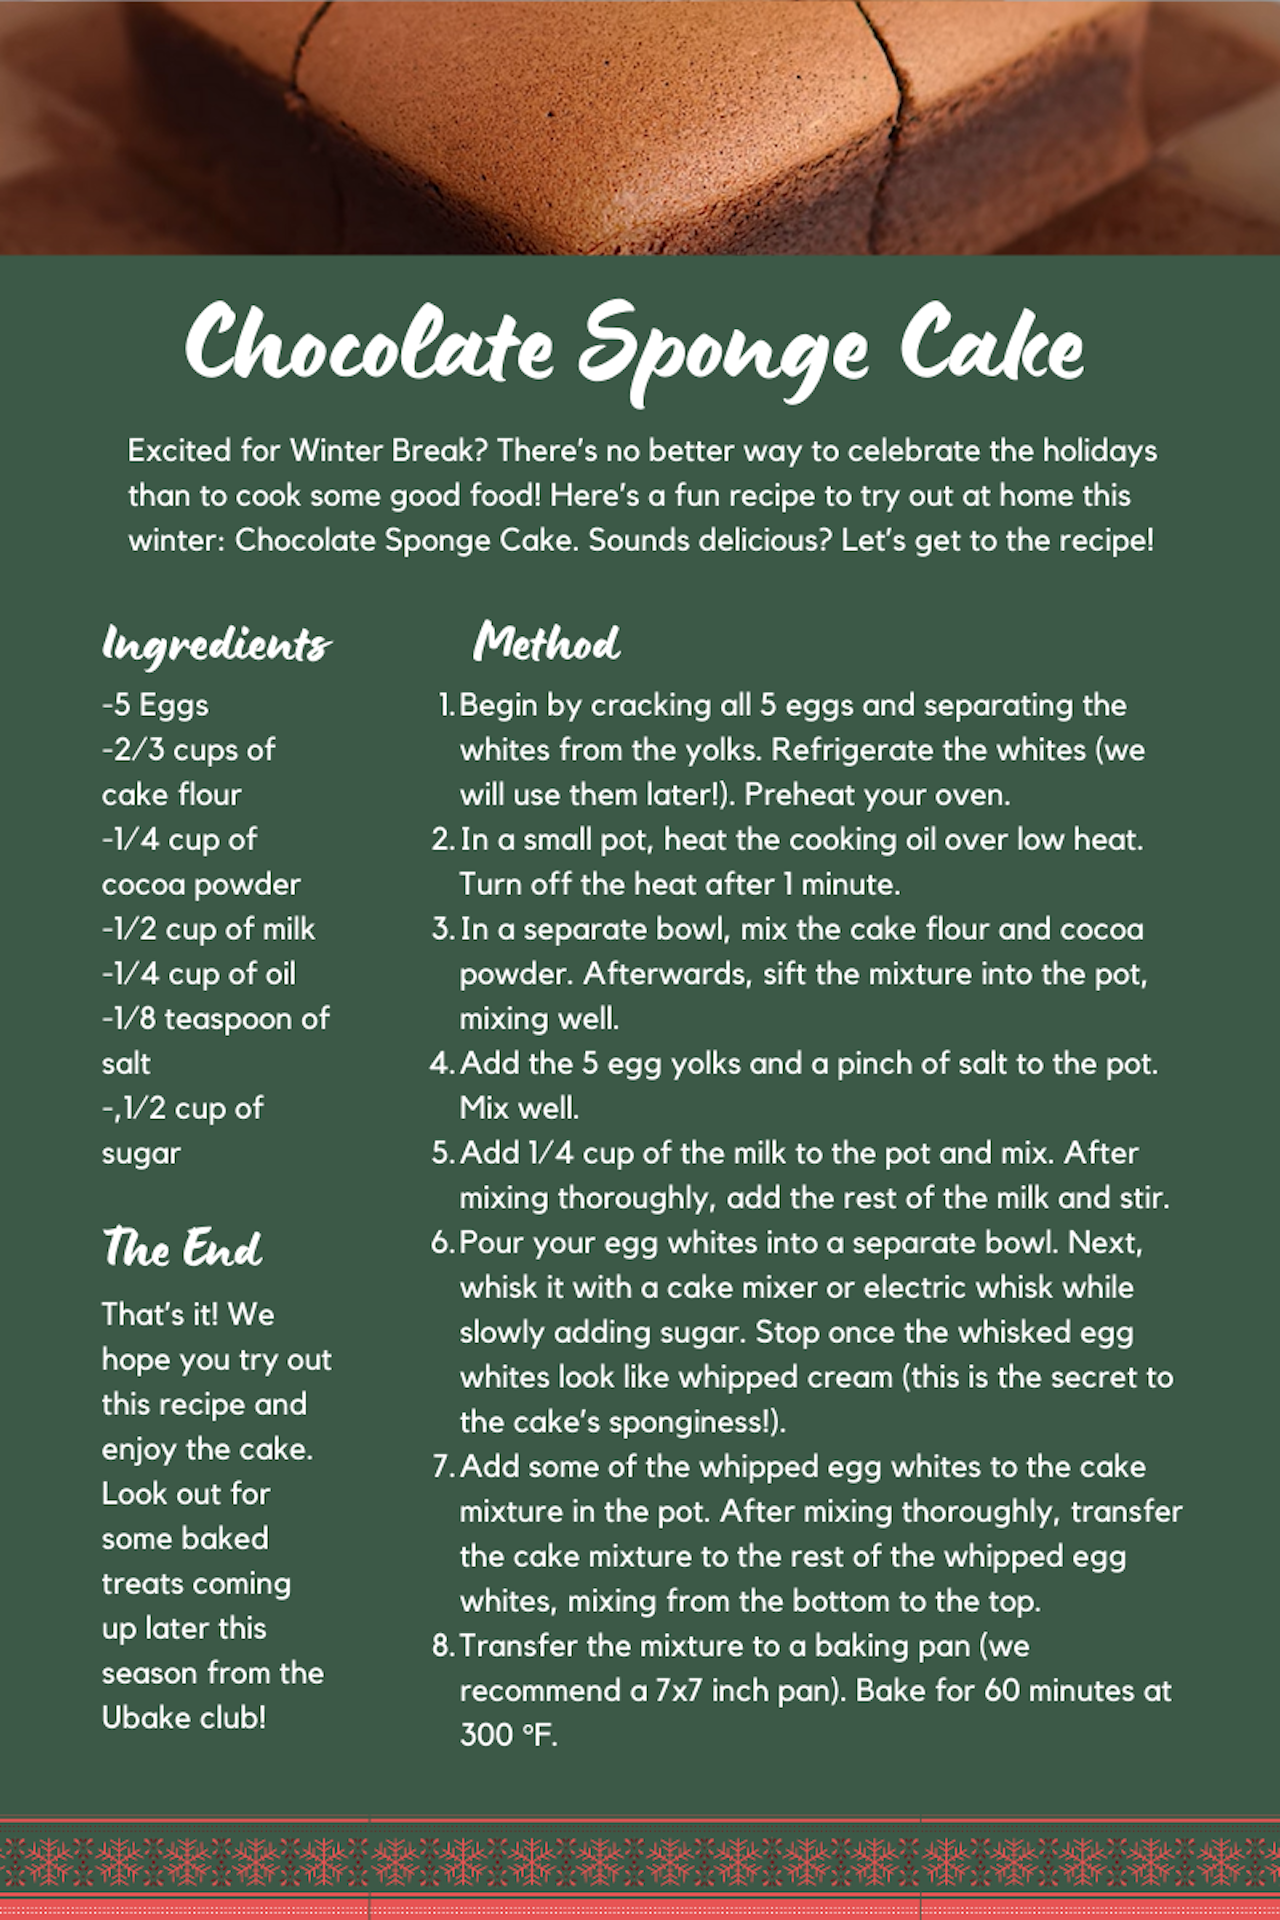 Chocolate Sponge Cake Recipe From U-Bake!